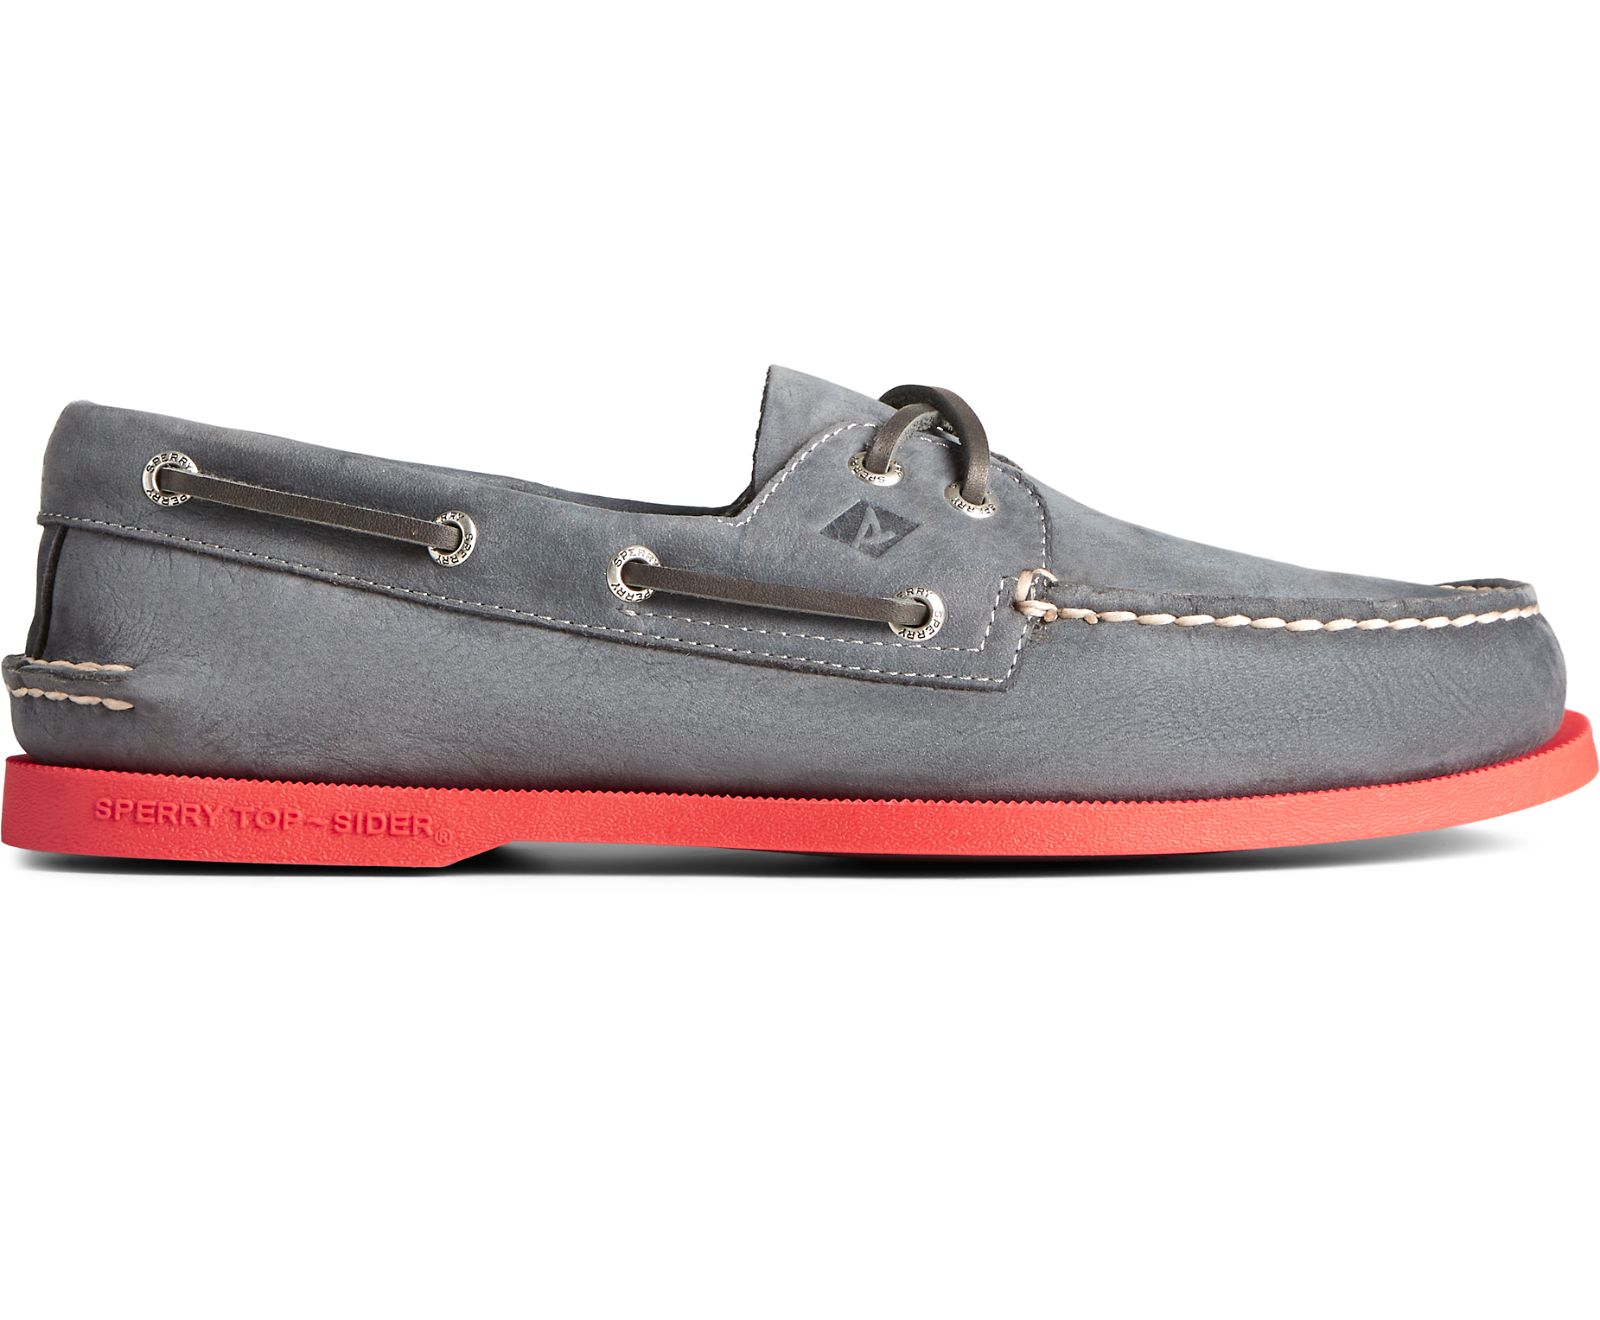 Men's Authentic Original 2-Eye Color Sole Boat Shoe - Grey/Red